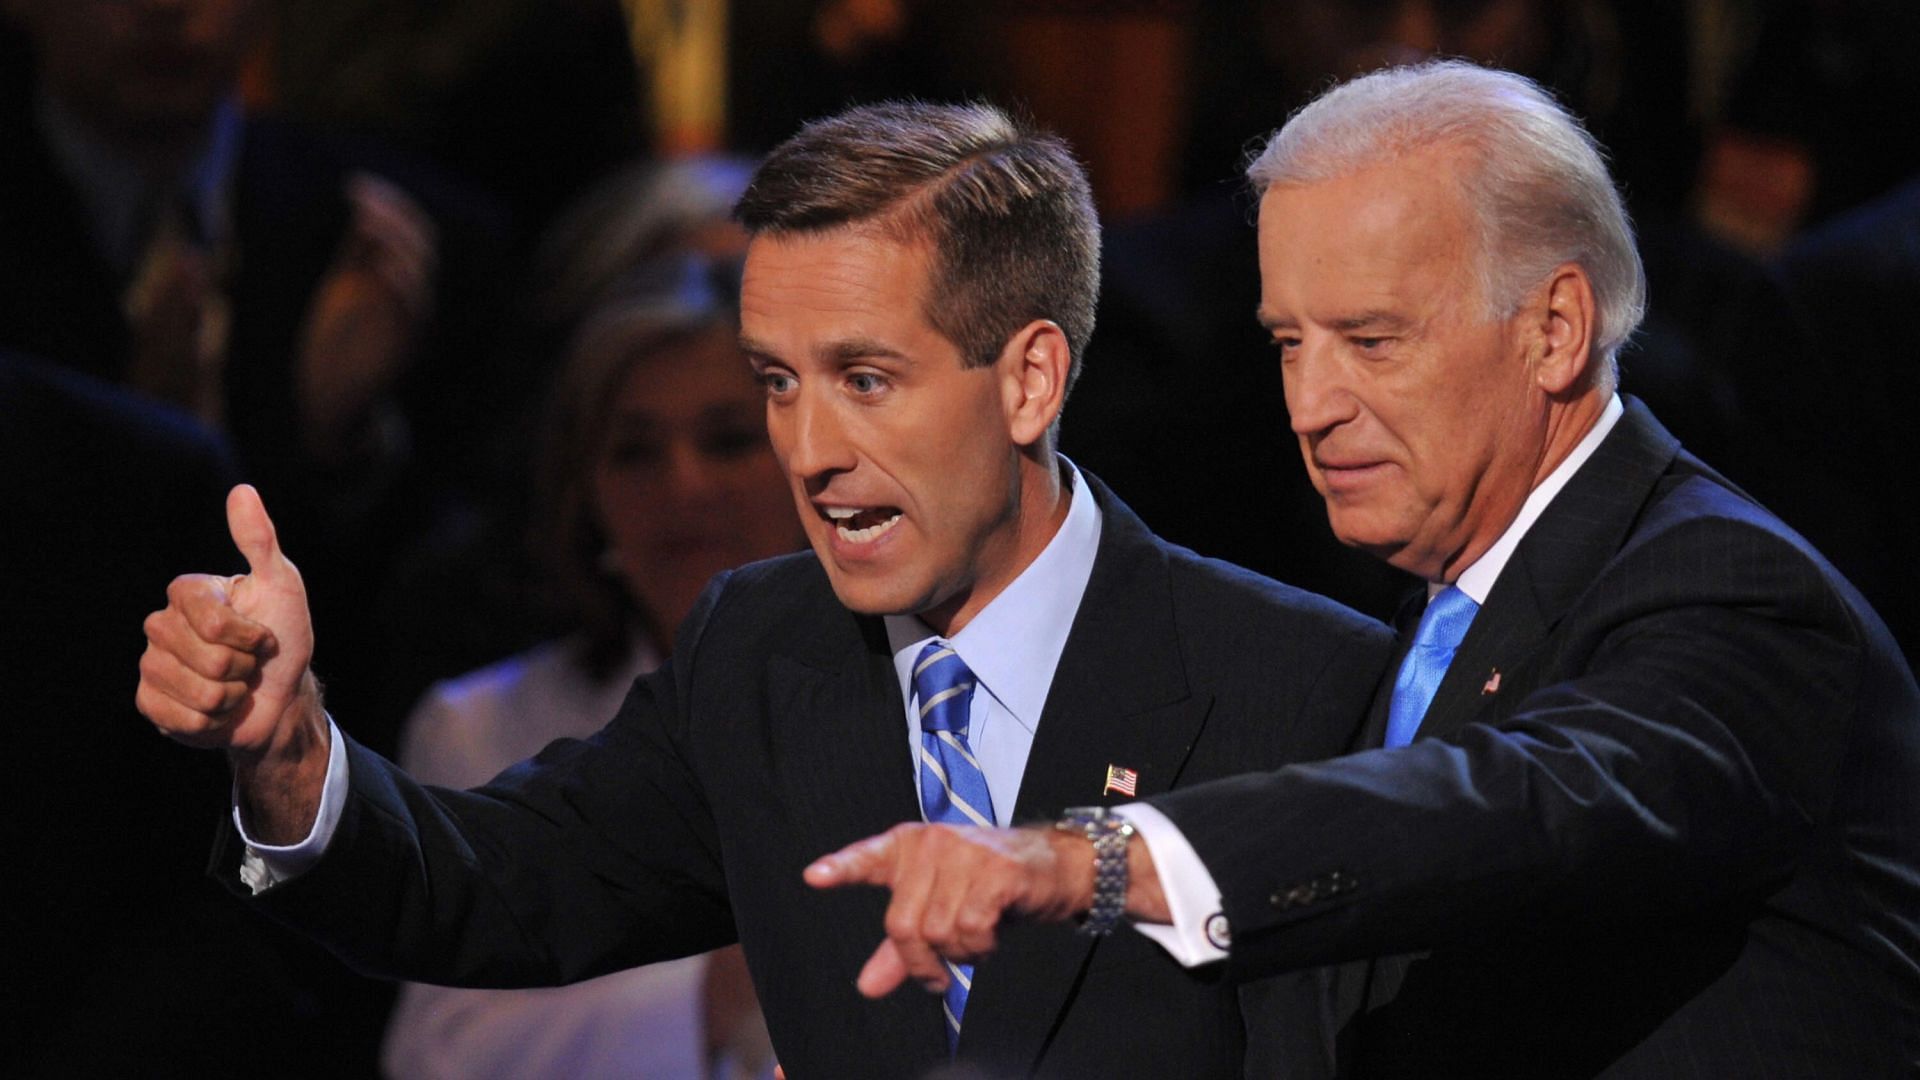 Joe Biden made a false claim about his son Beau Biden (image via Getty Images)